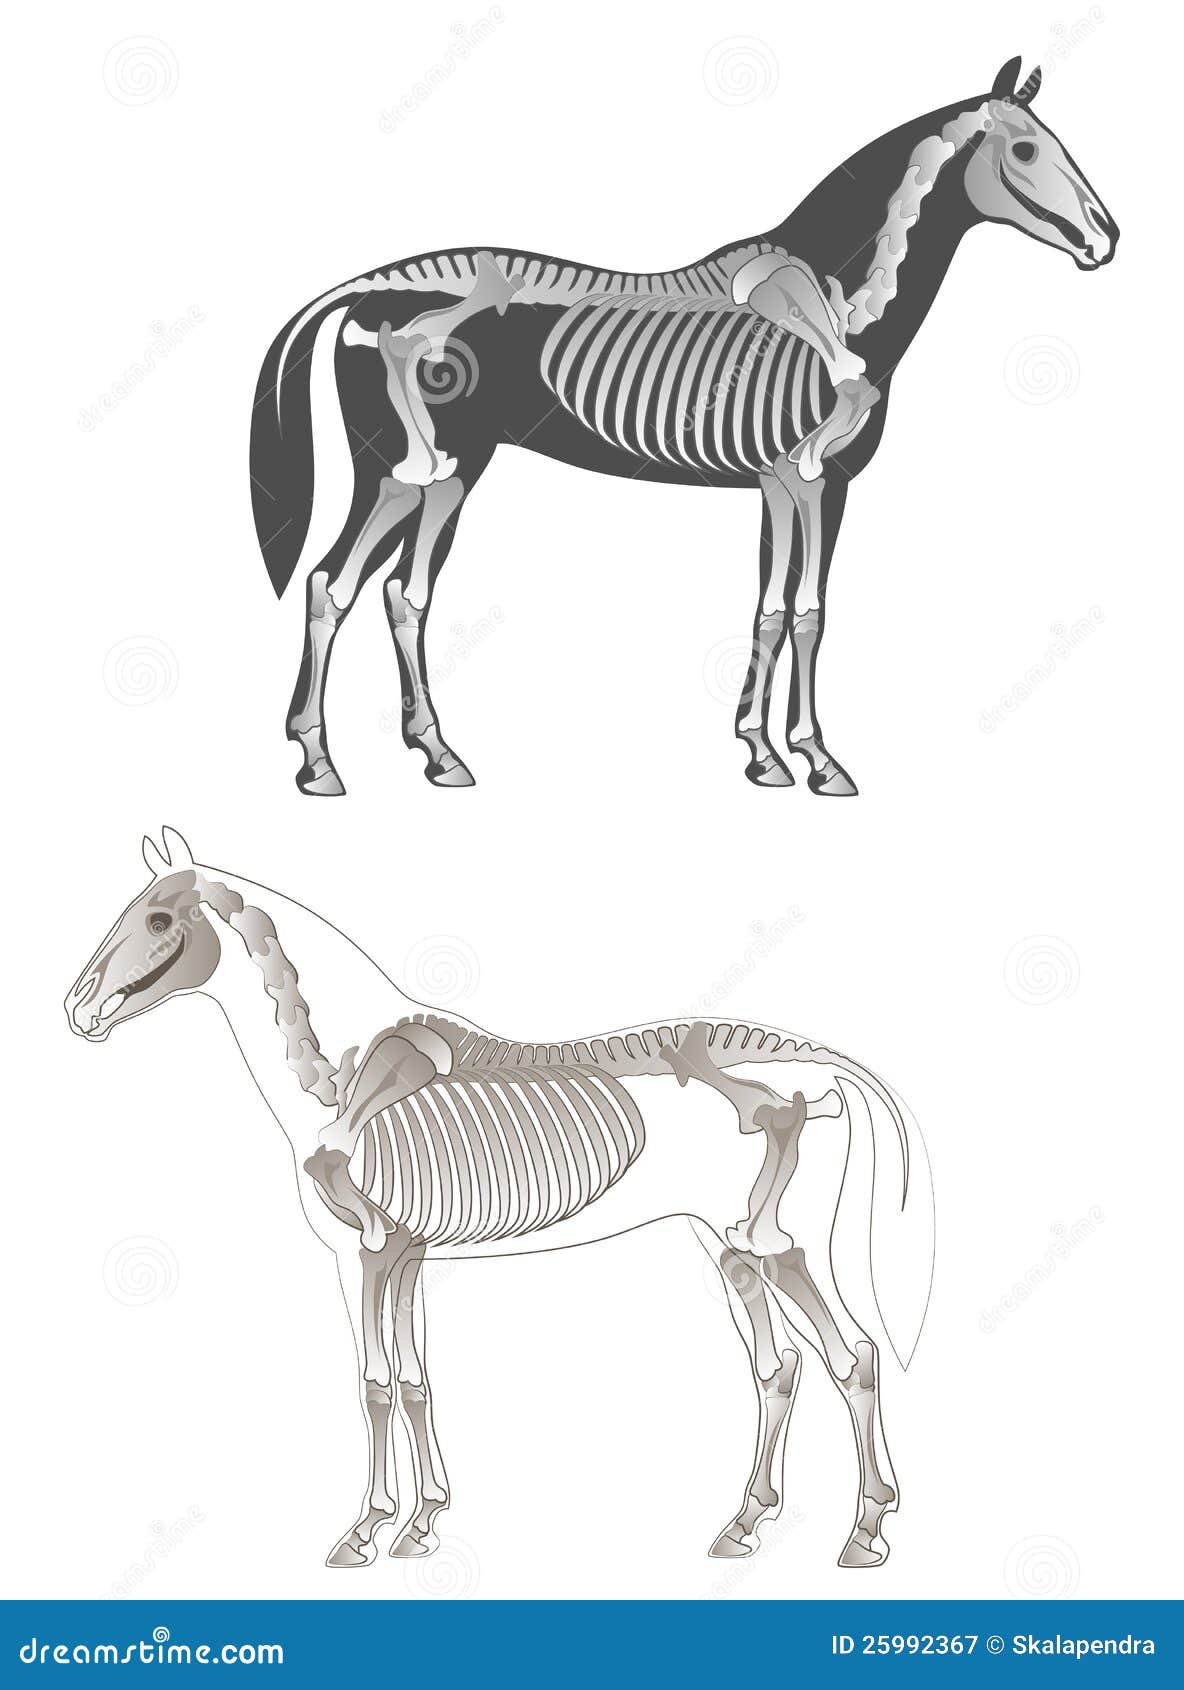 skeleton horse